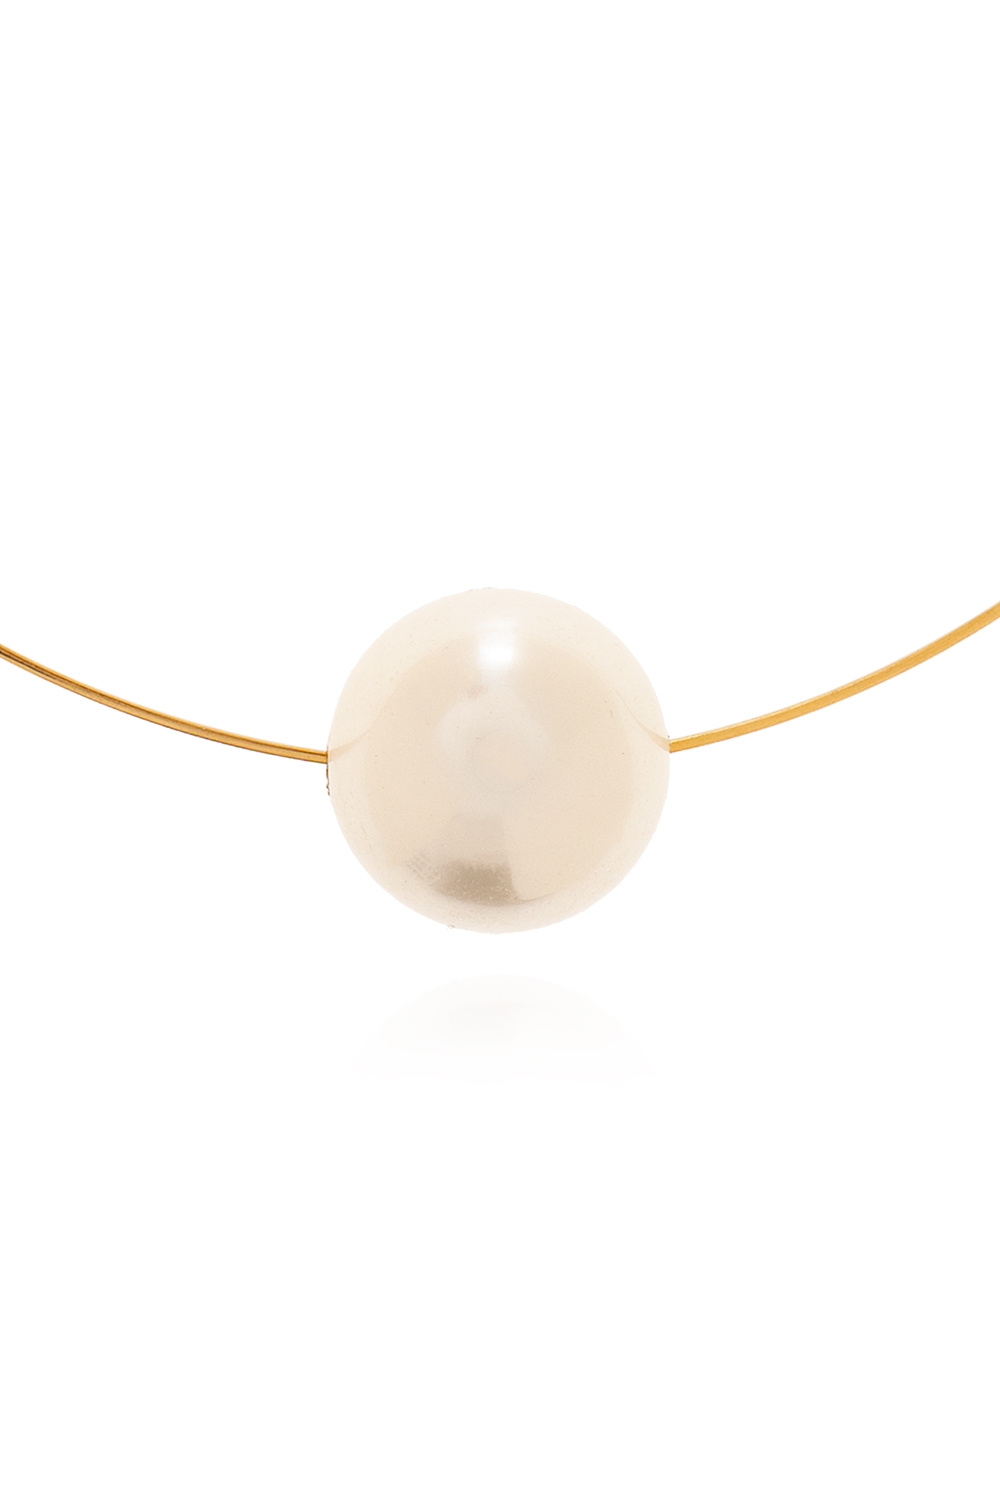 JIL SANDER Pearl necklace